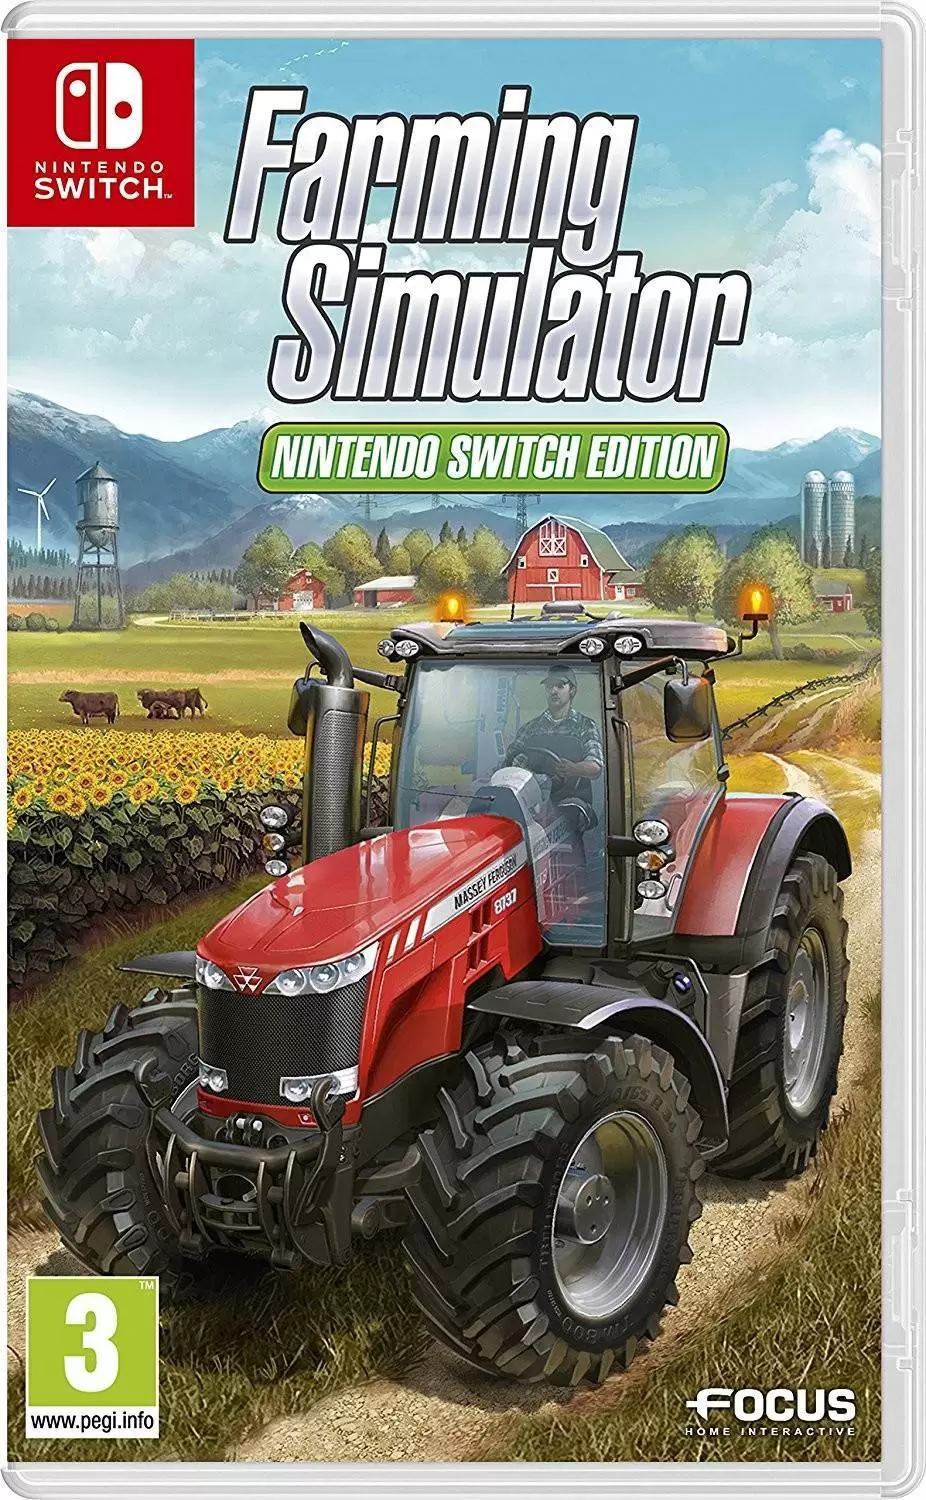 Jeux Nintendo Switch - Farming Simulator